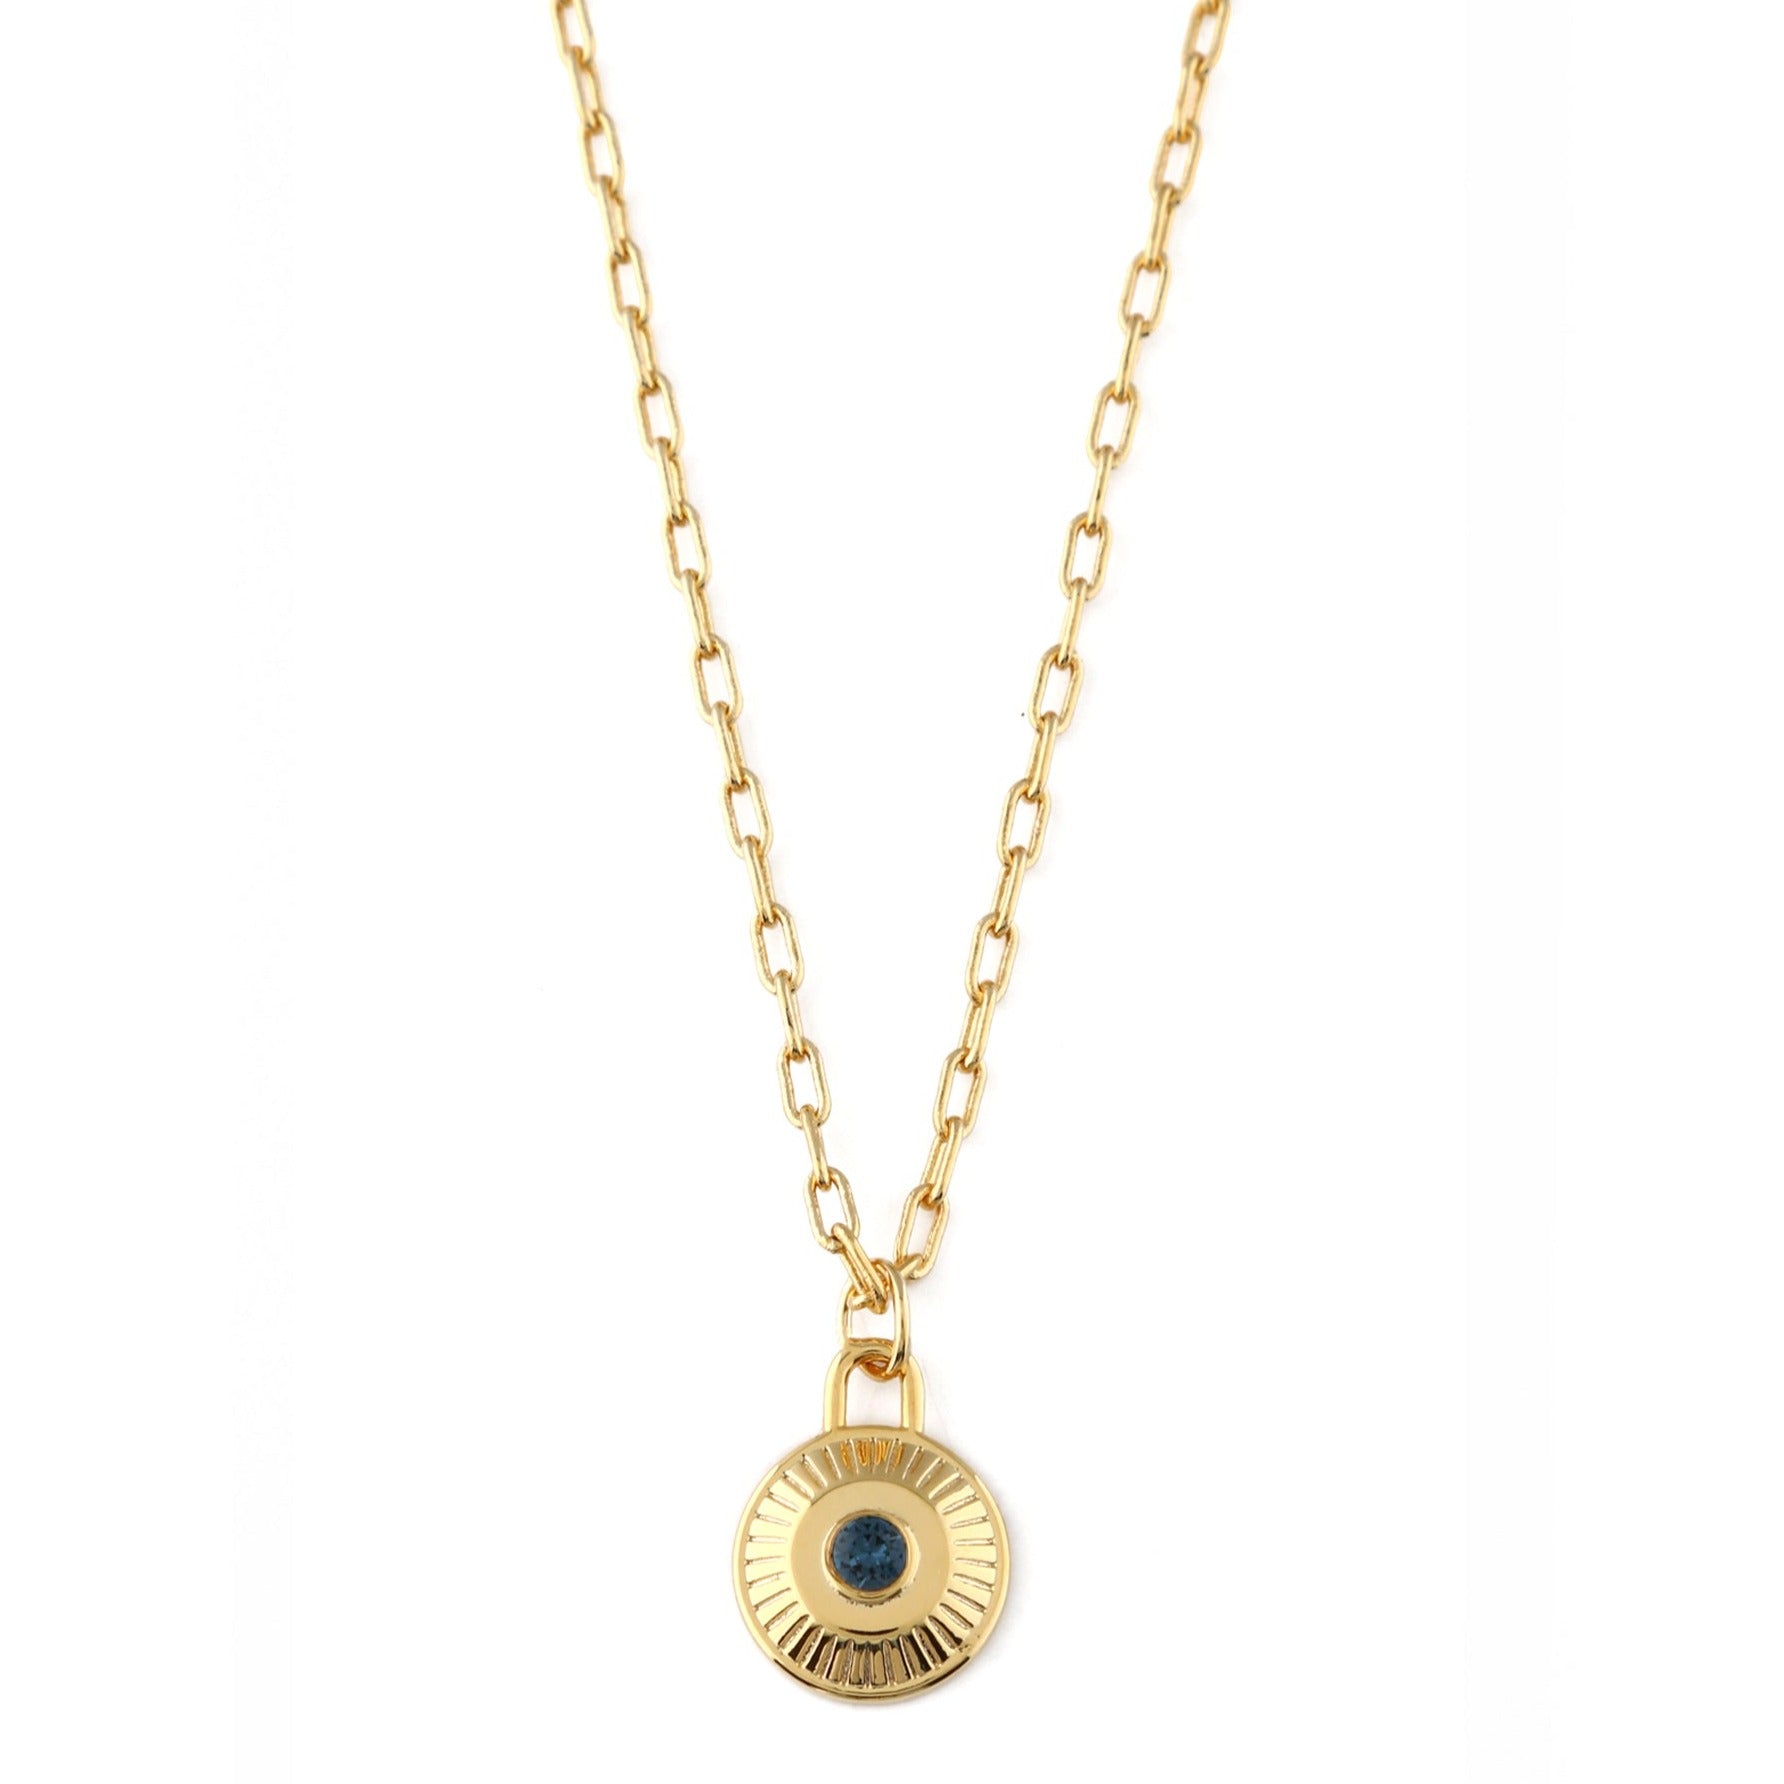 December Birthstone Necklace Made With Swarovski Crystals - Gold - Orelia London